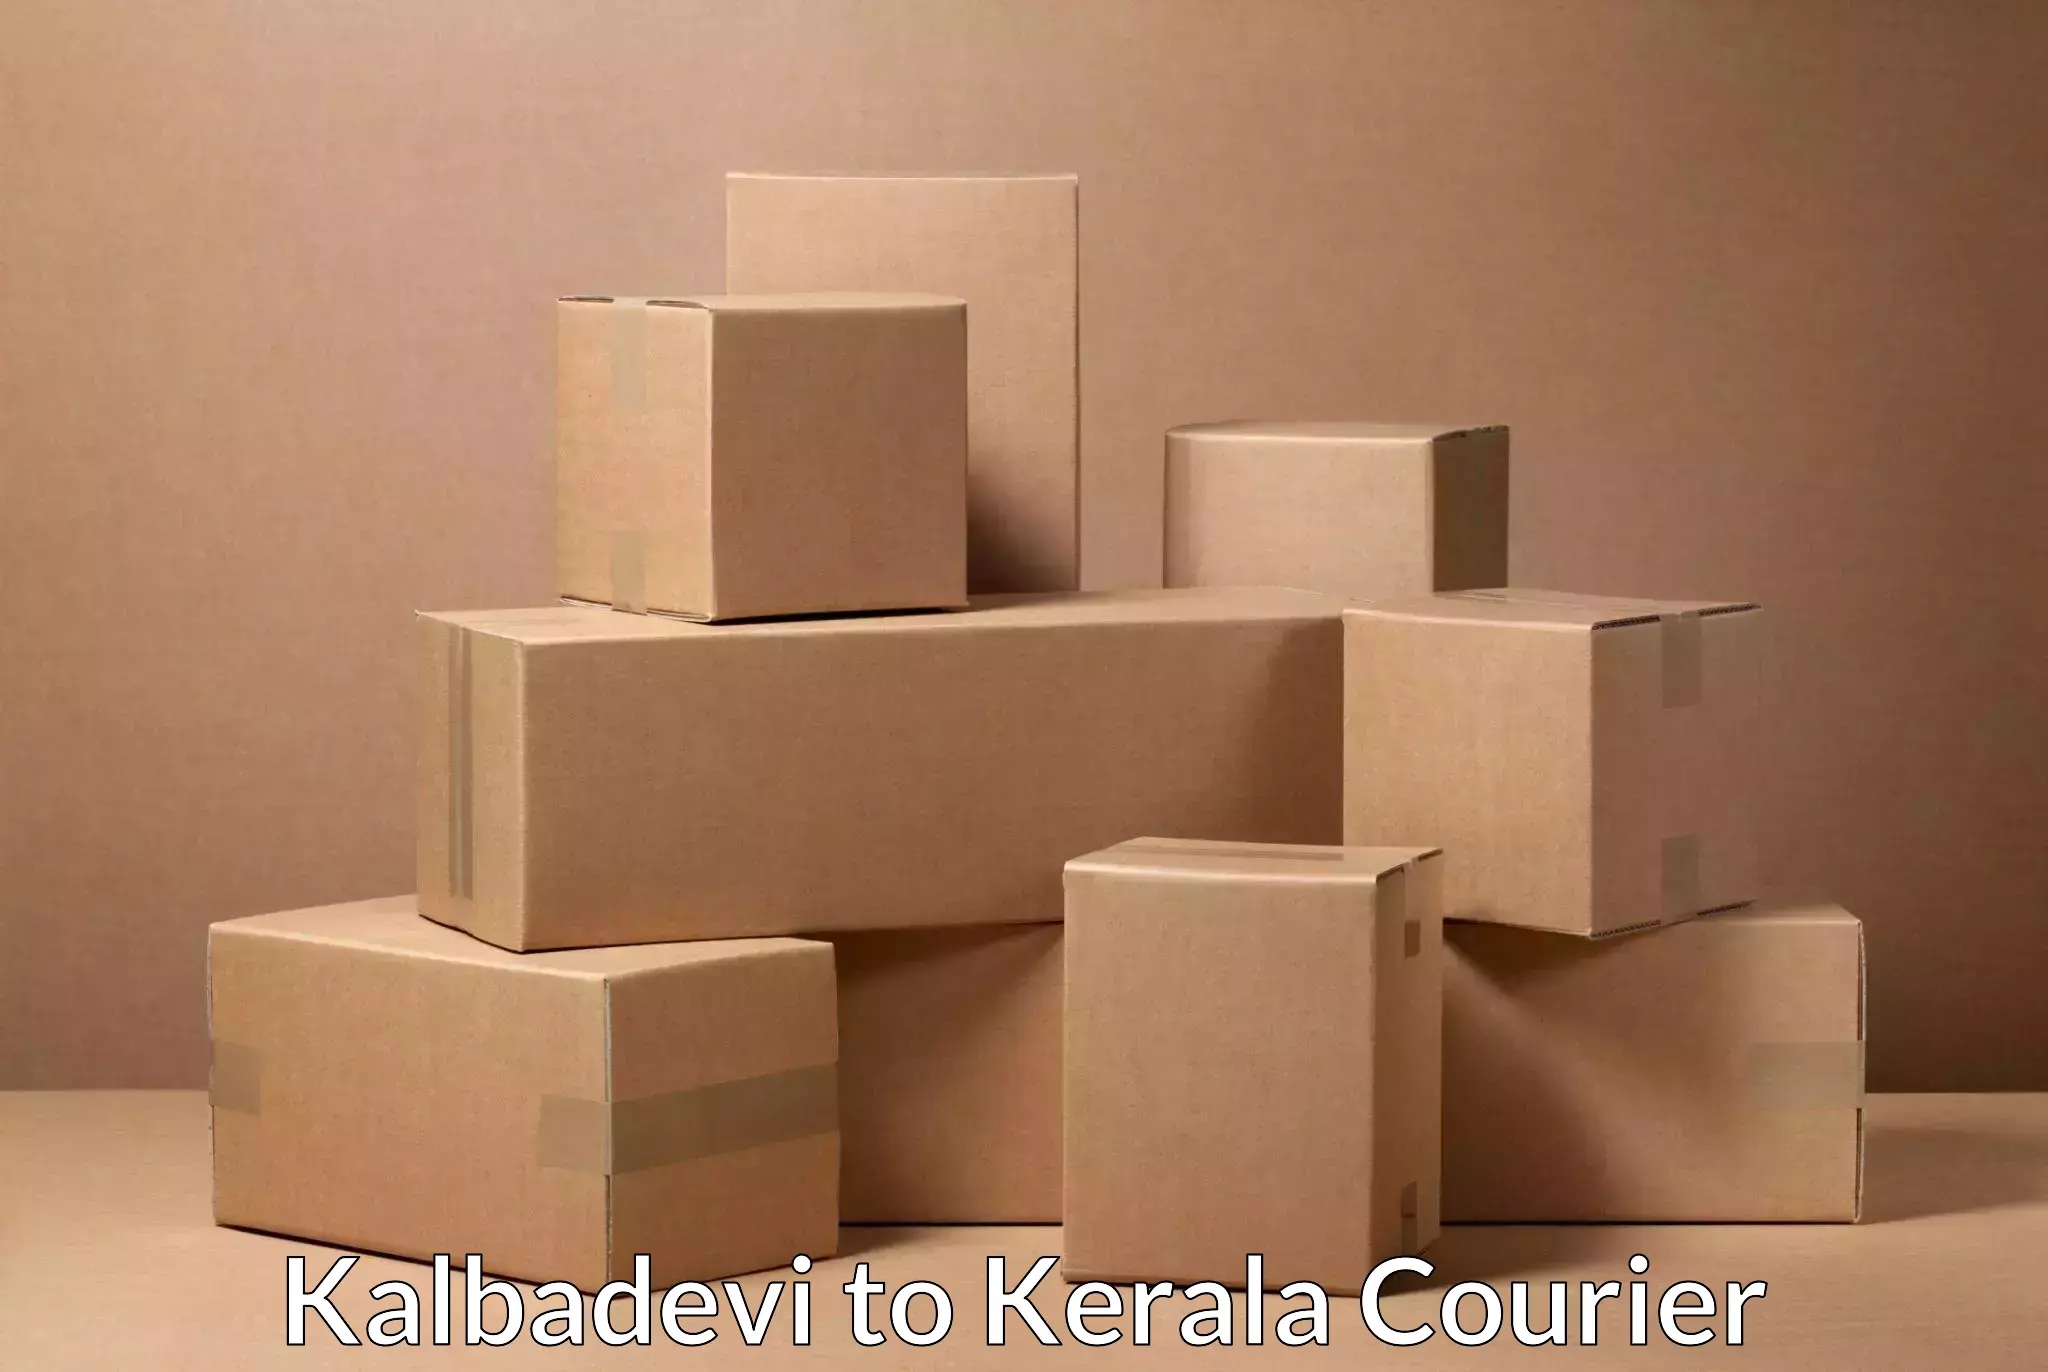 Same-day delivery options Kalbadevi to Ernakulam